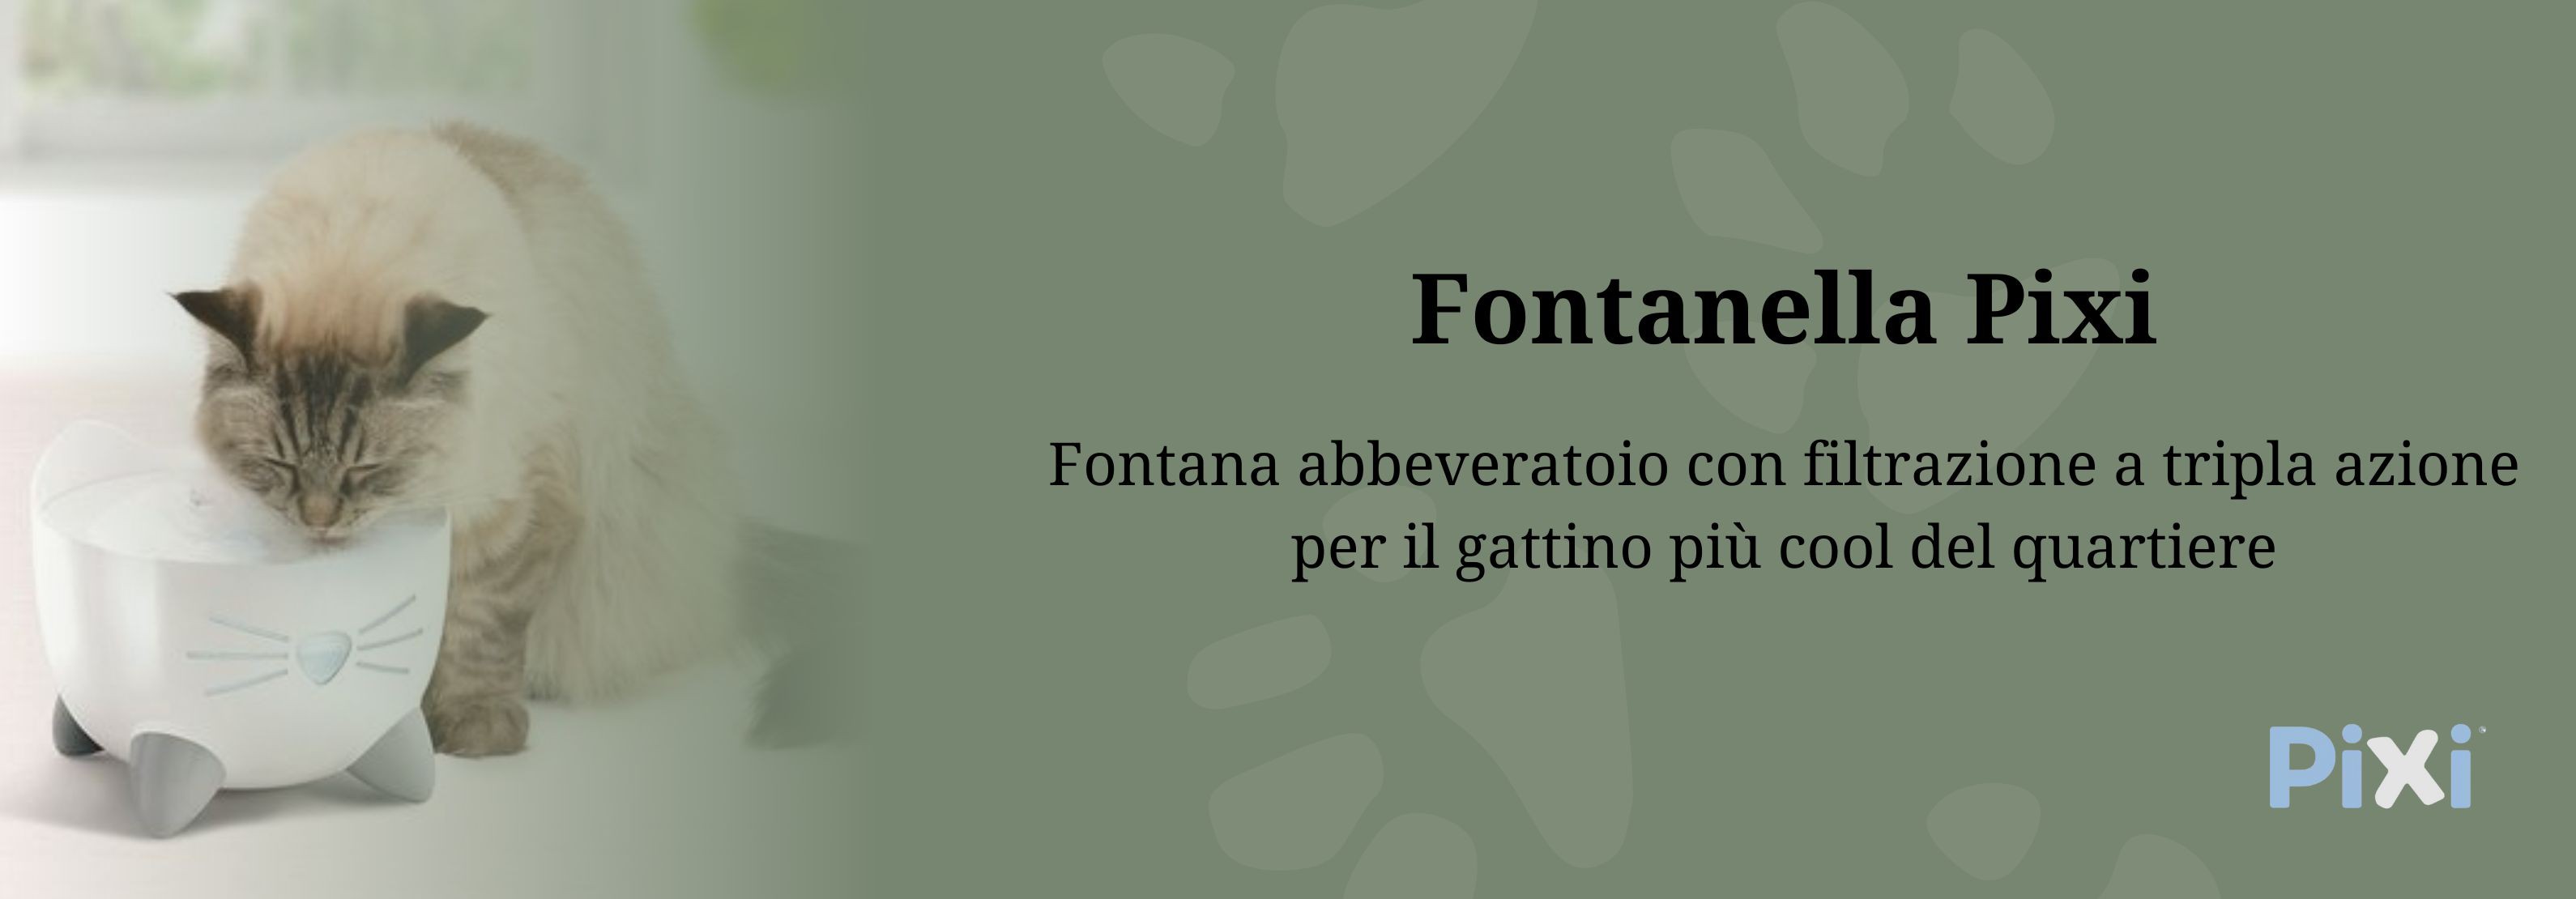 Pixi Fontanella